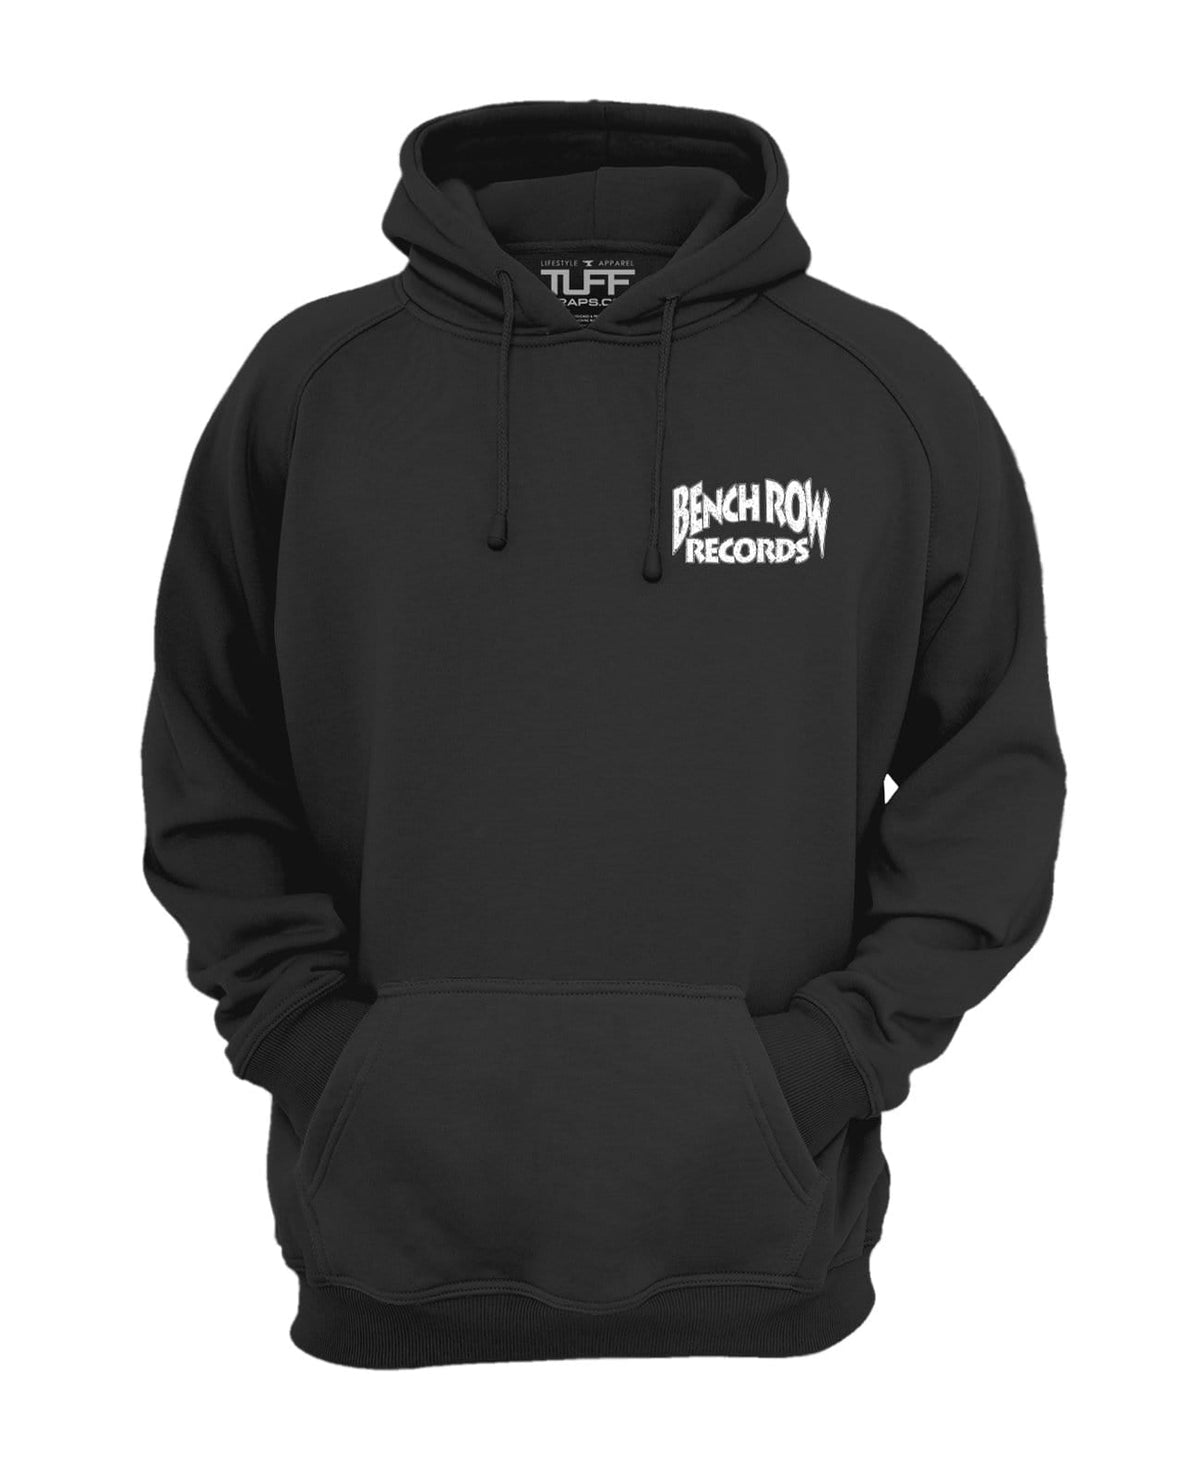 Bench Row Records Hooded Sweatshirt TuffWraps.com